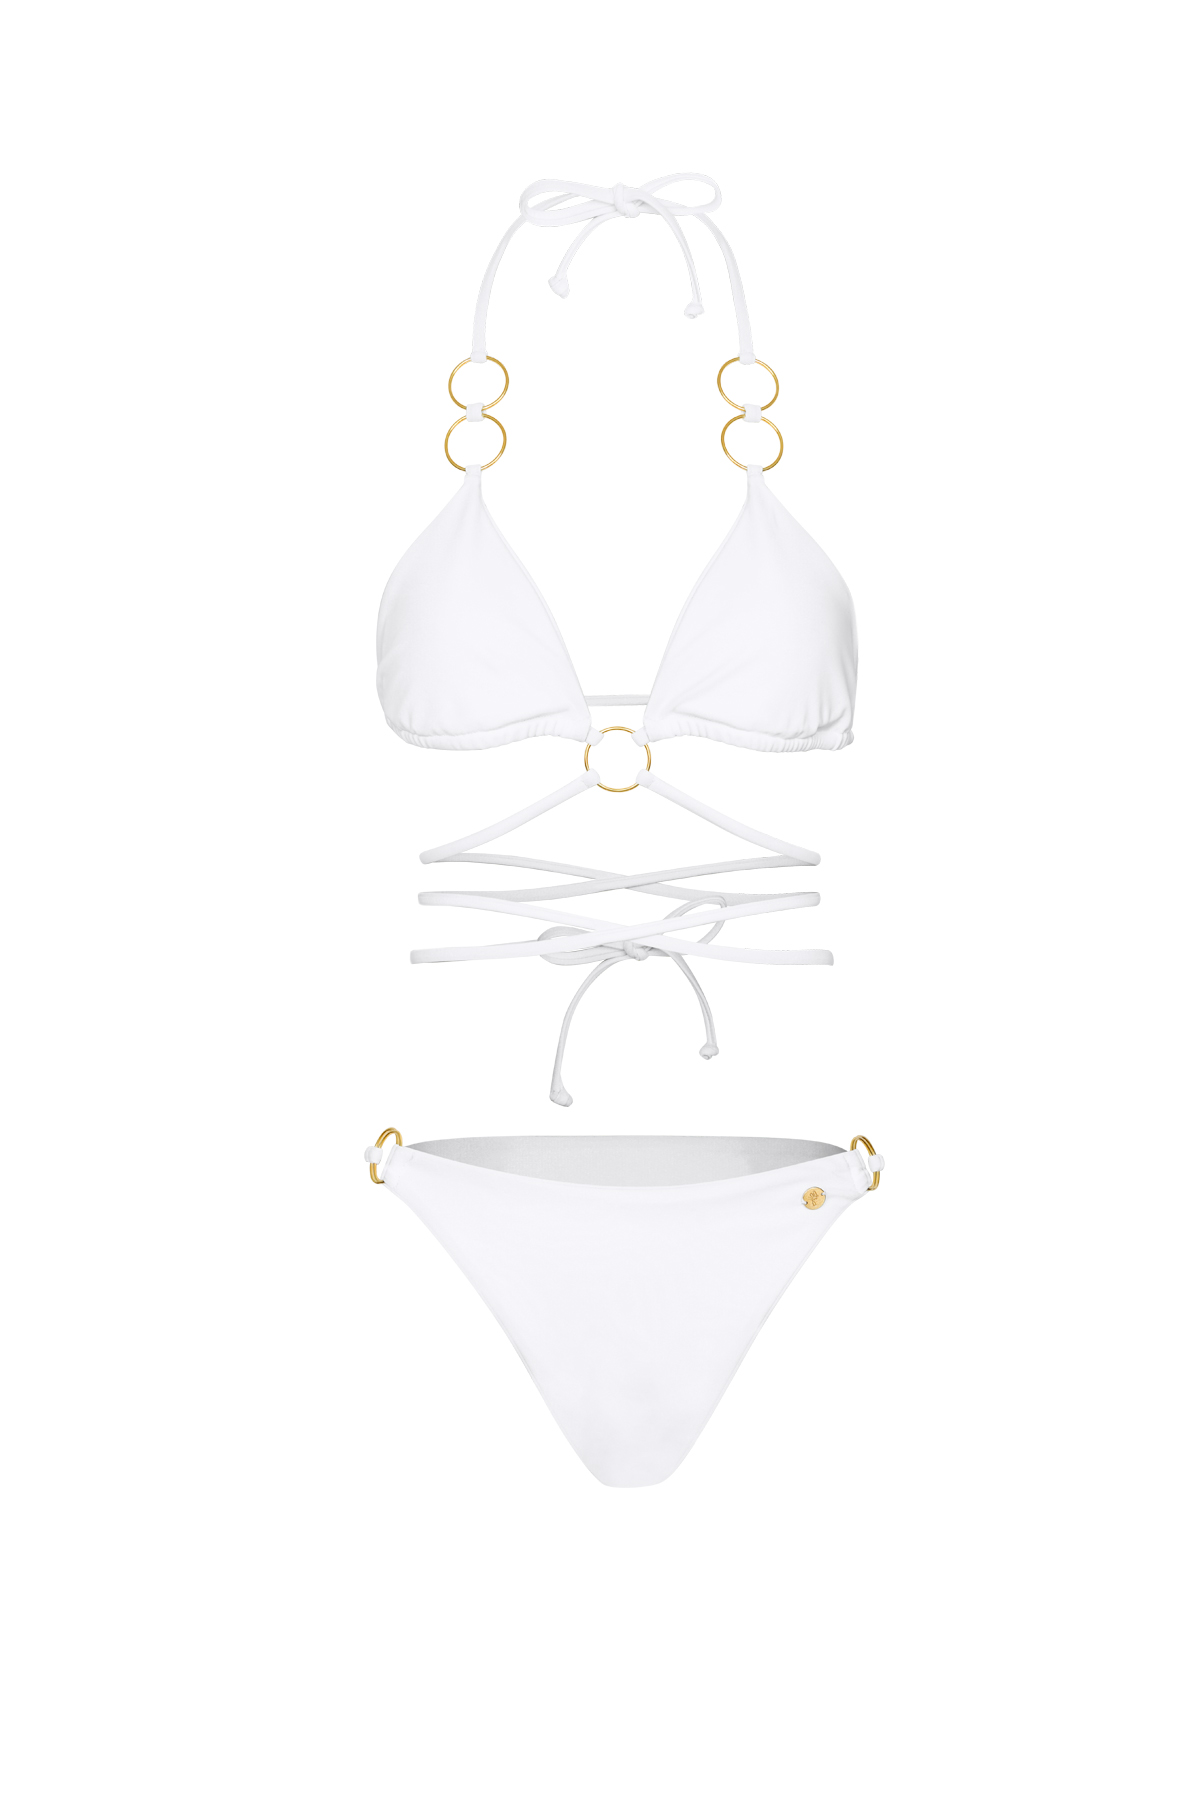 Bikini gold rings - White S h5 